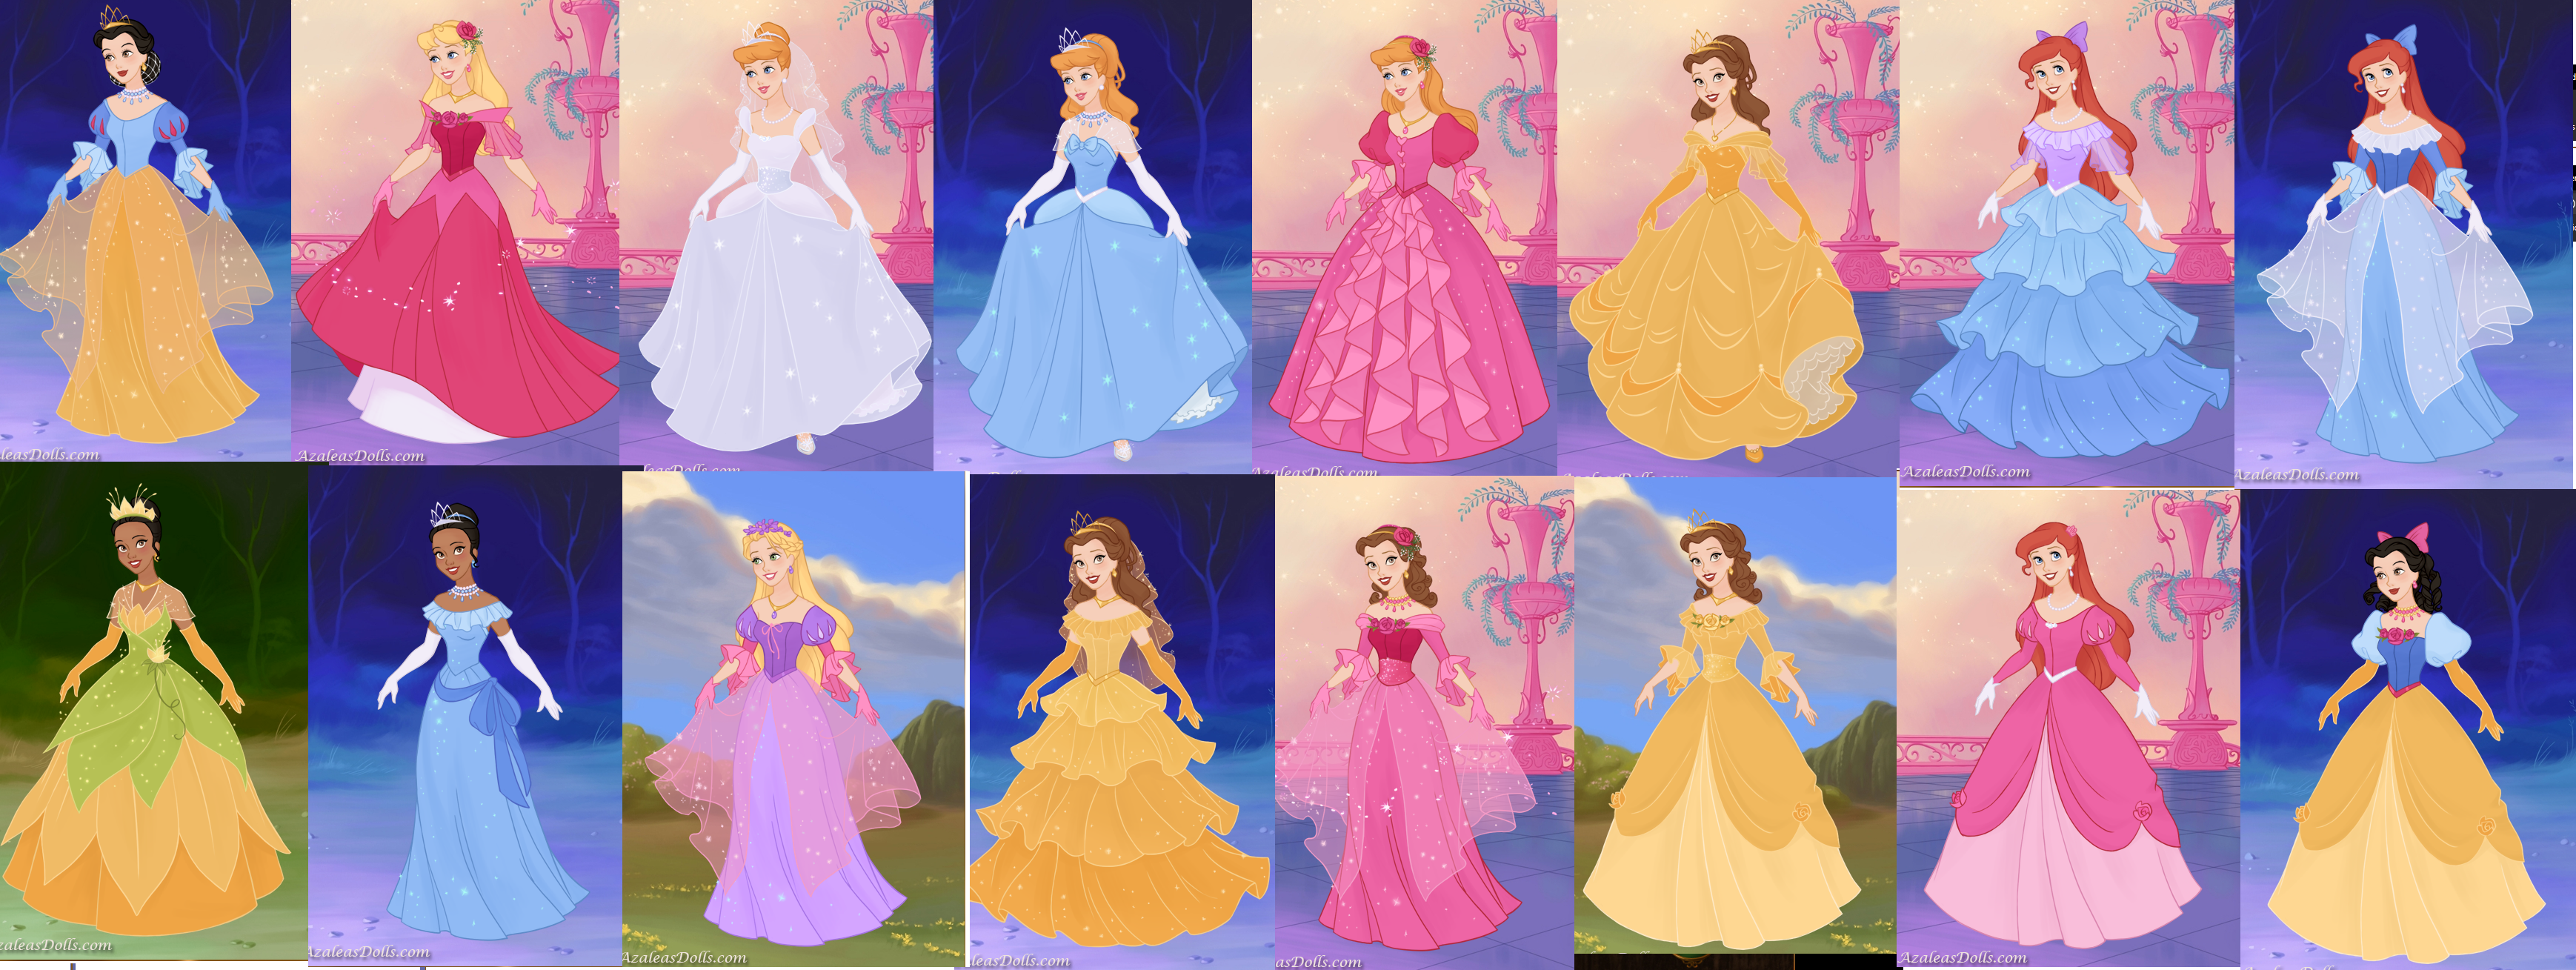 Fairytale Disney Princesses Dresses by adrianaTheGirlOnFire on DeviantArt